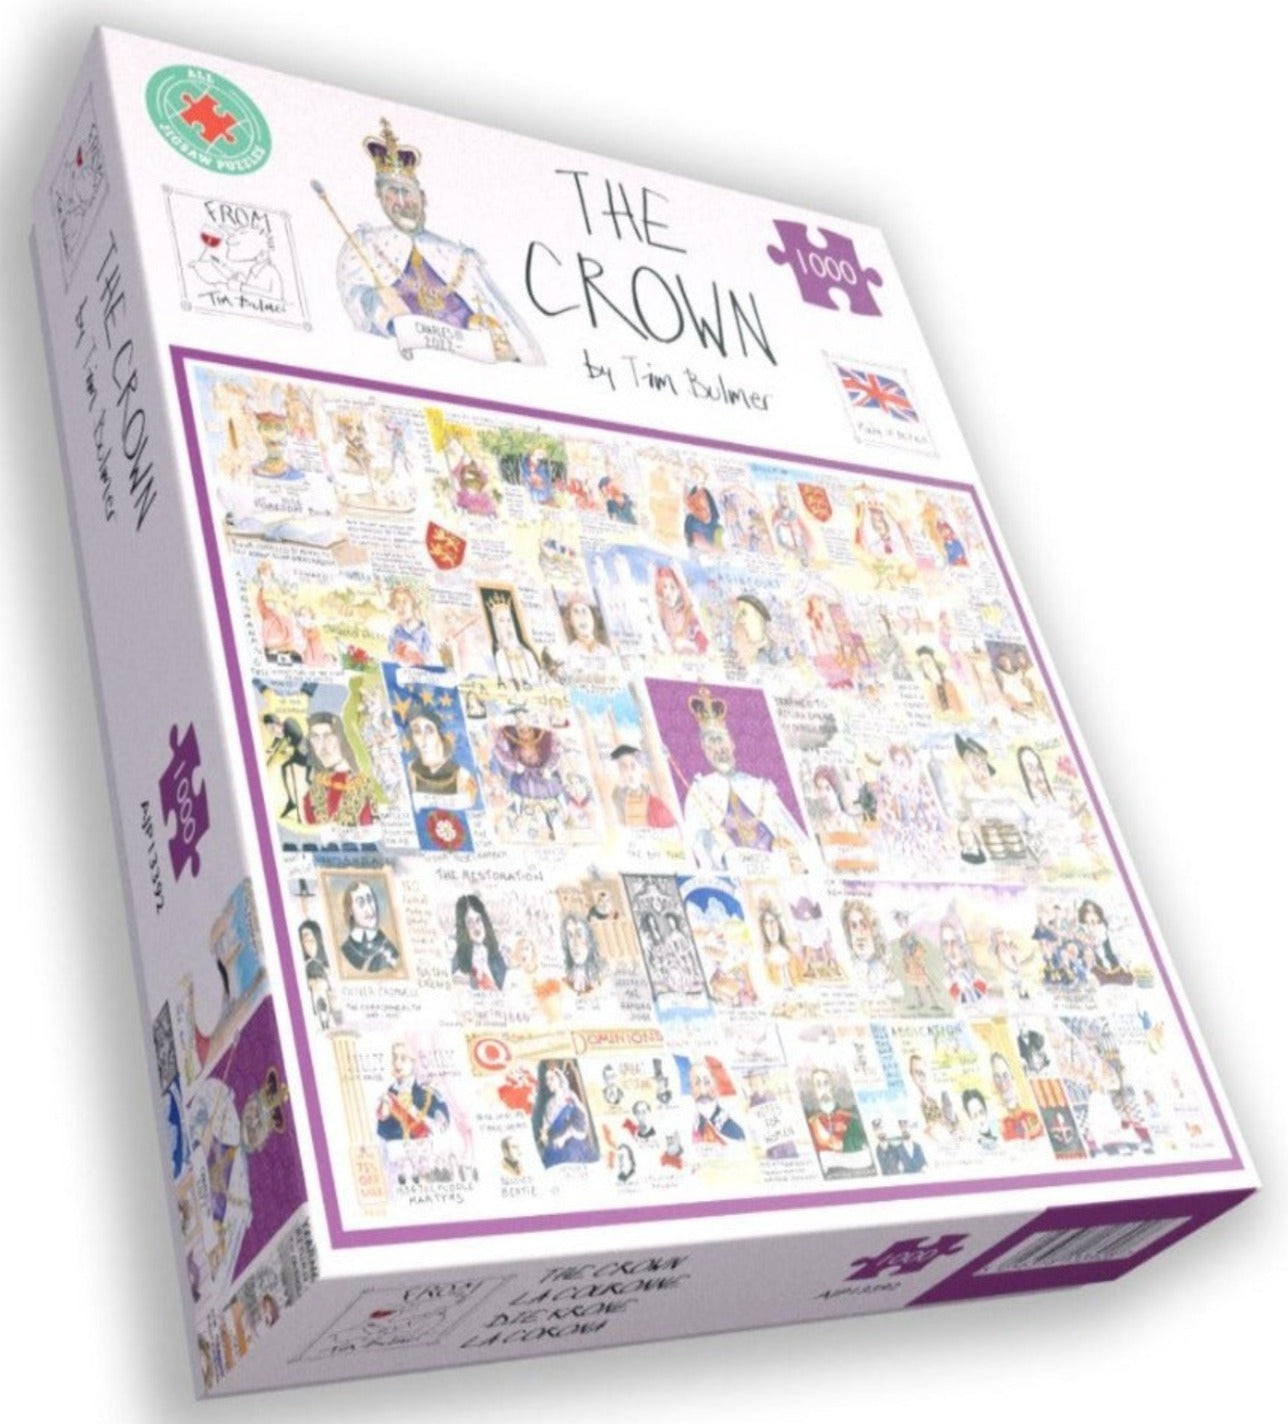 The Crown- Tim Bulmer 1000 Jigsaw Puzzle